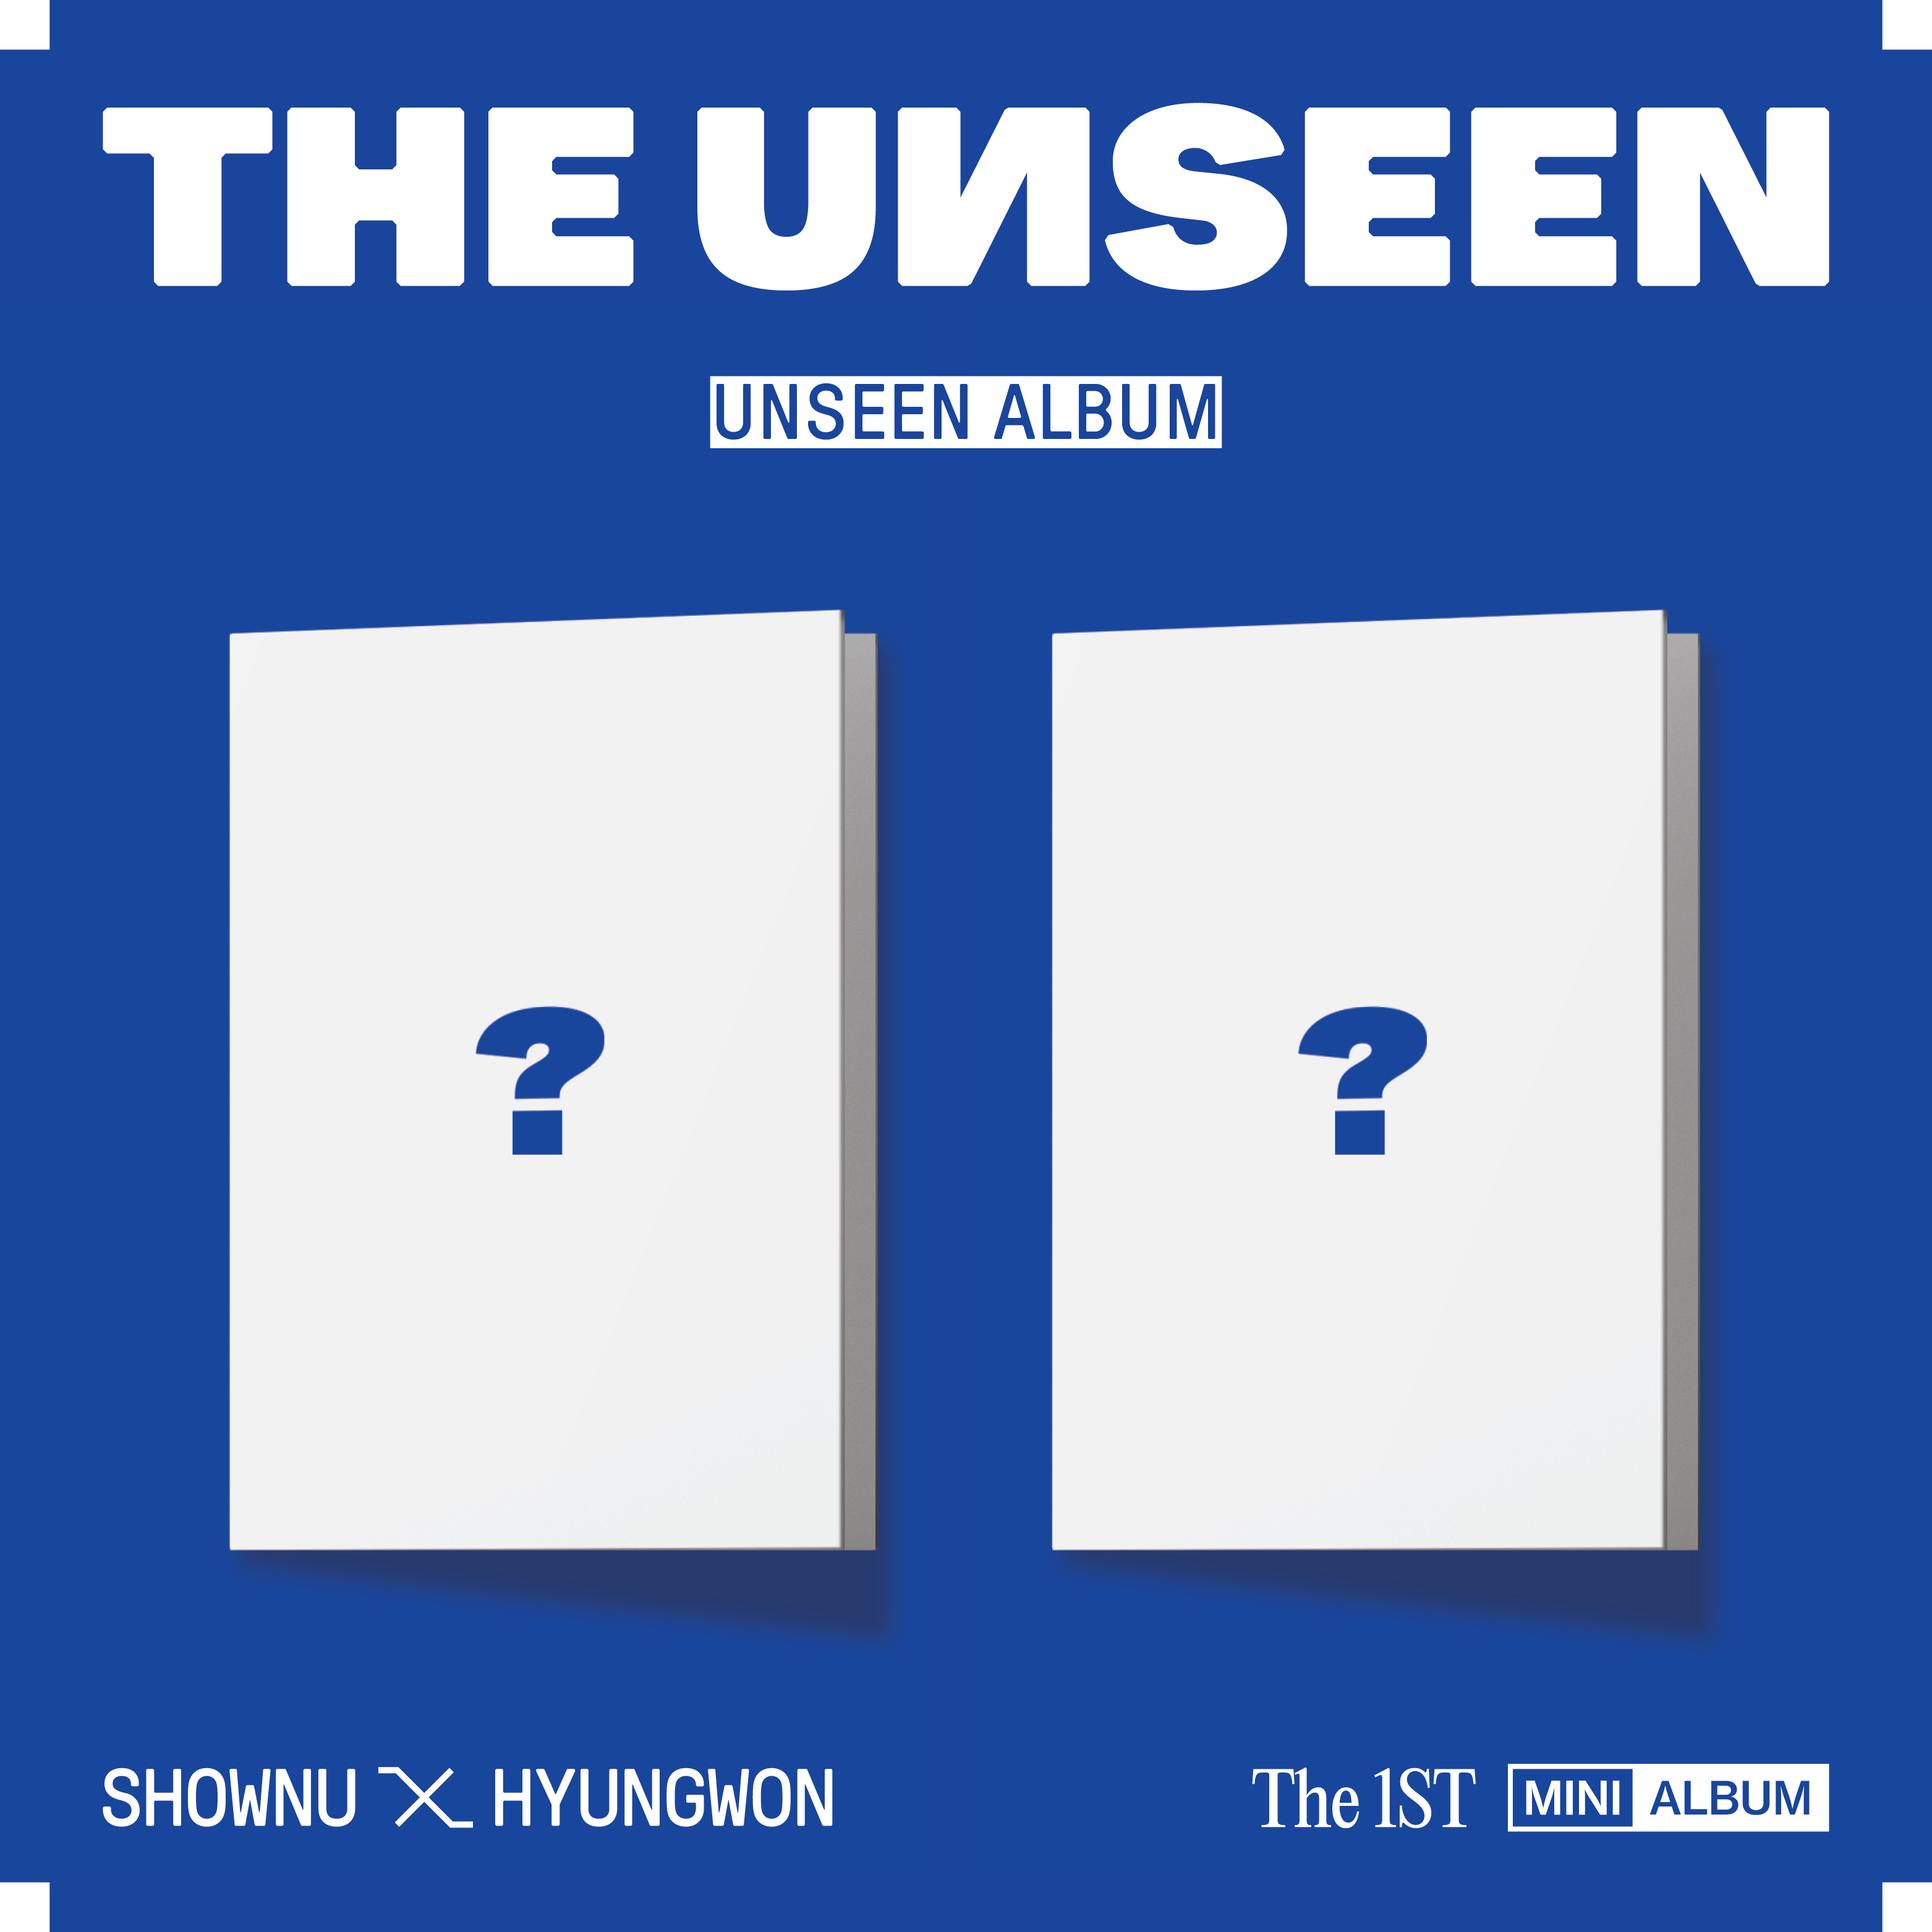 SHOWNU X HYUNGWON - ミニアルバム1集 [THE UNSEEN] (UNSEEN ALBUM) (UNSEEN Ver.) (リミテッドエディション)